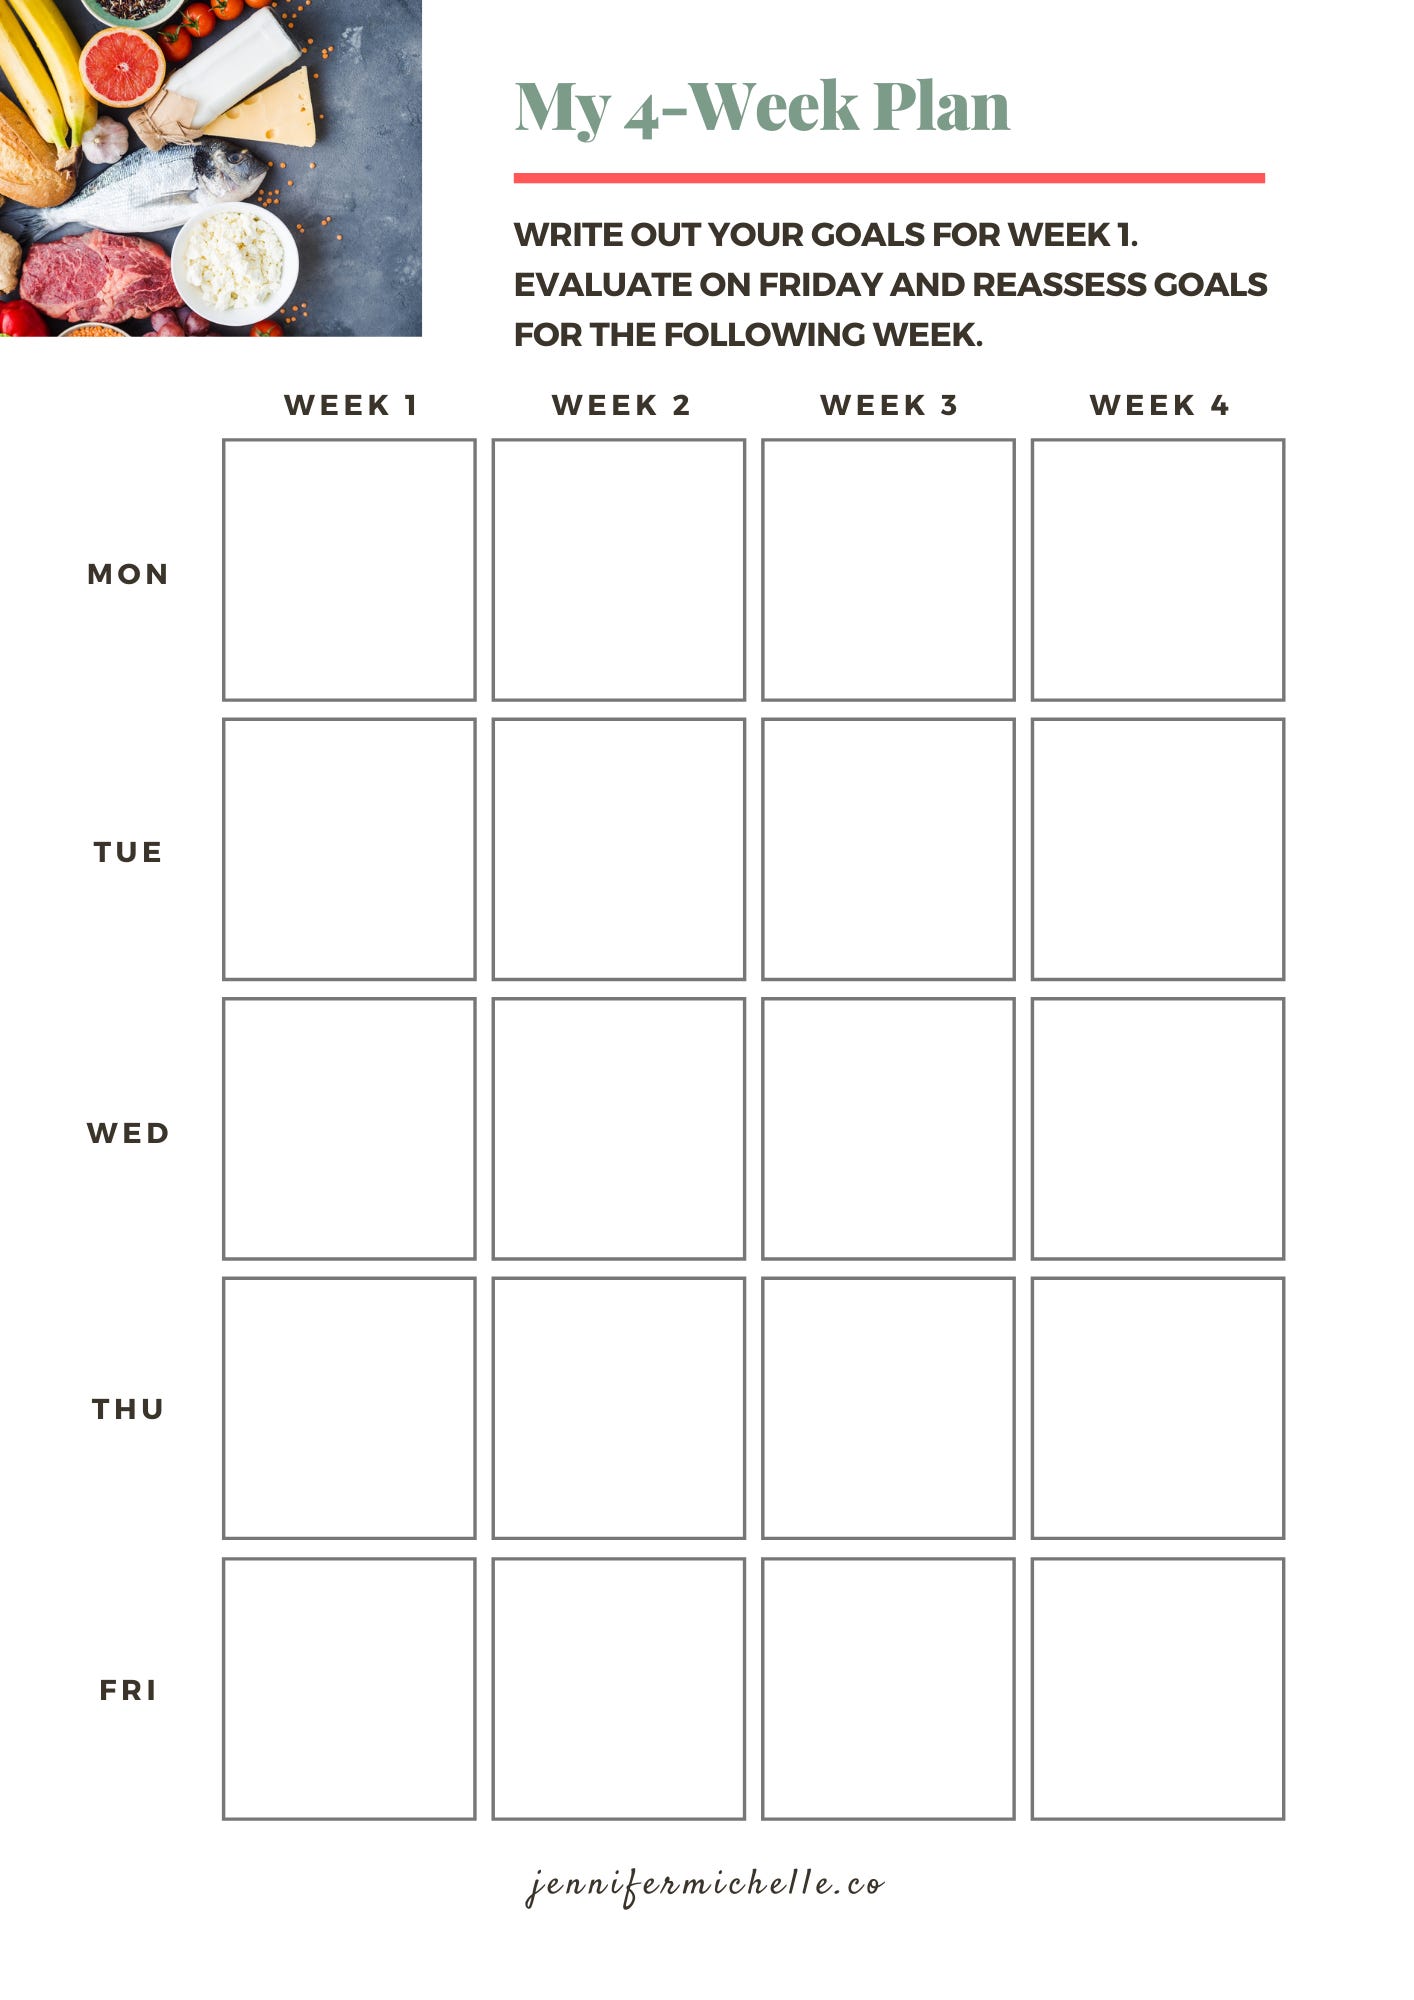 download 4-week health goal calendar via substack